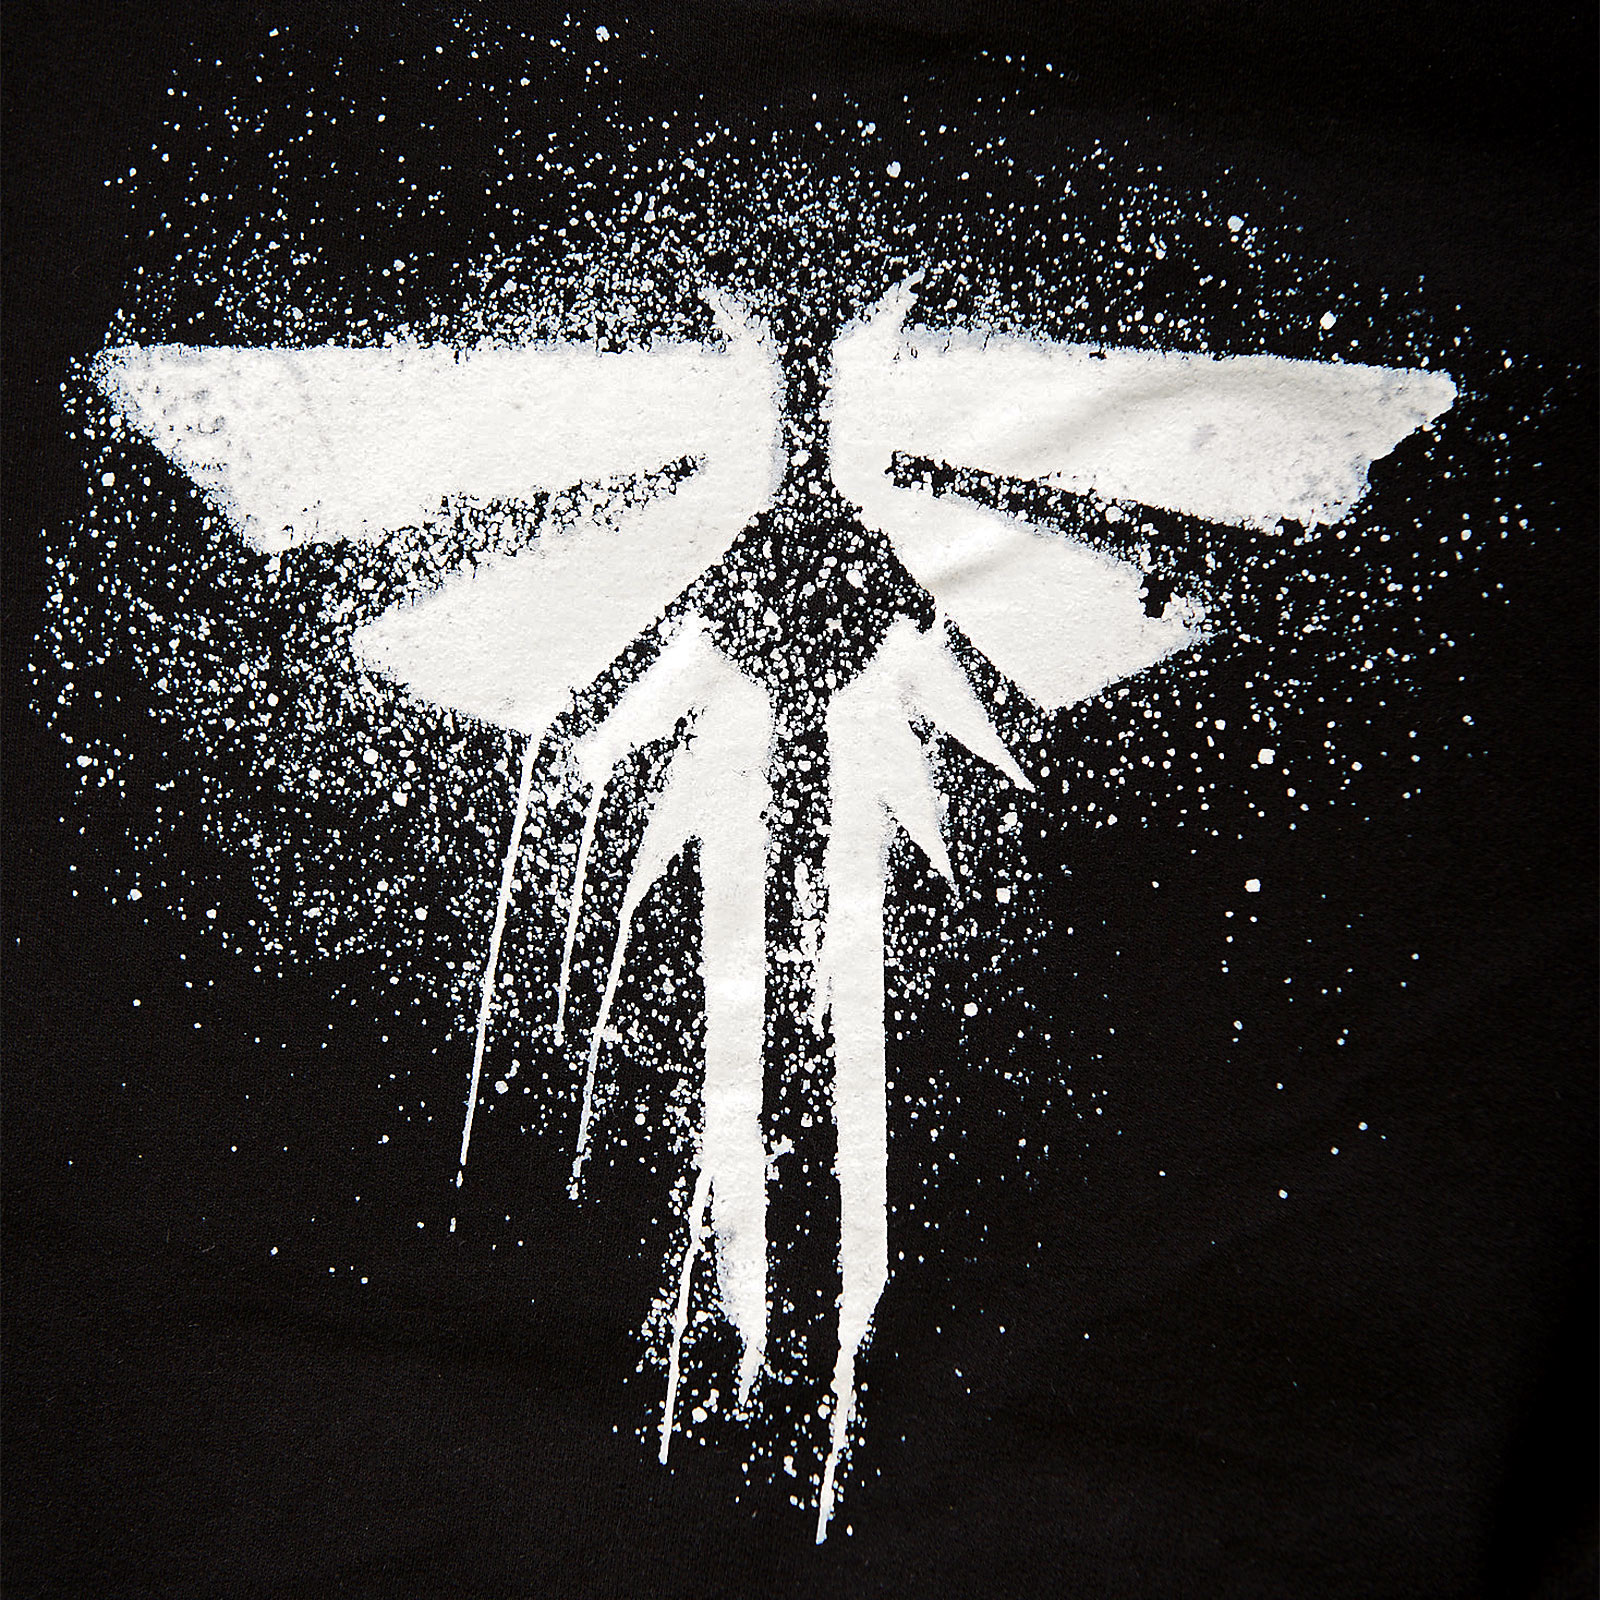 The Last of Us - Fireflies Logo Hoodie zwart